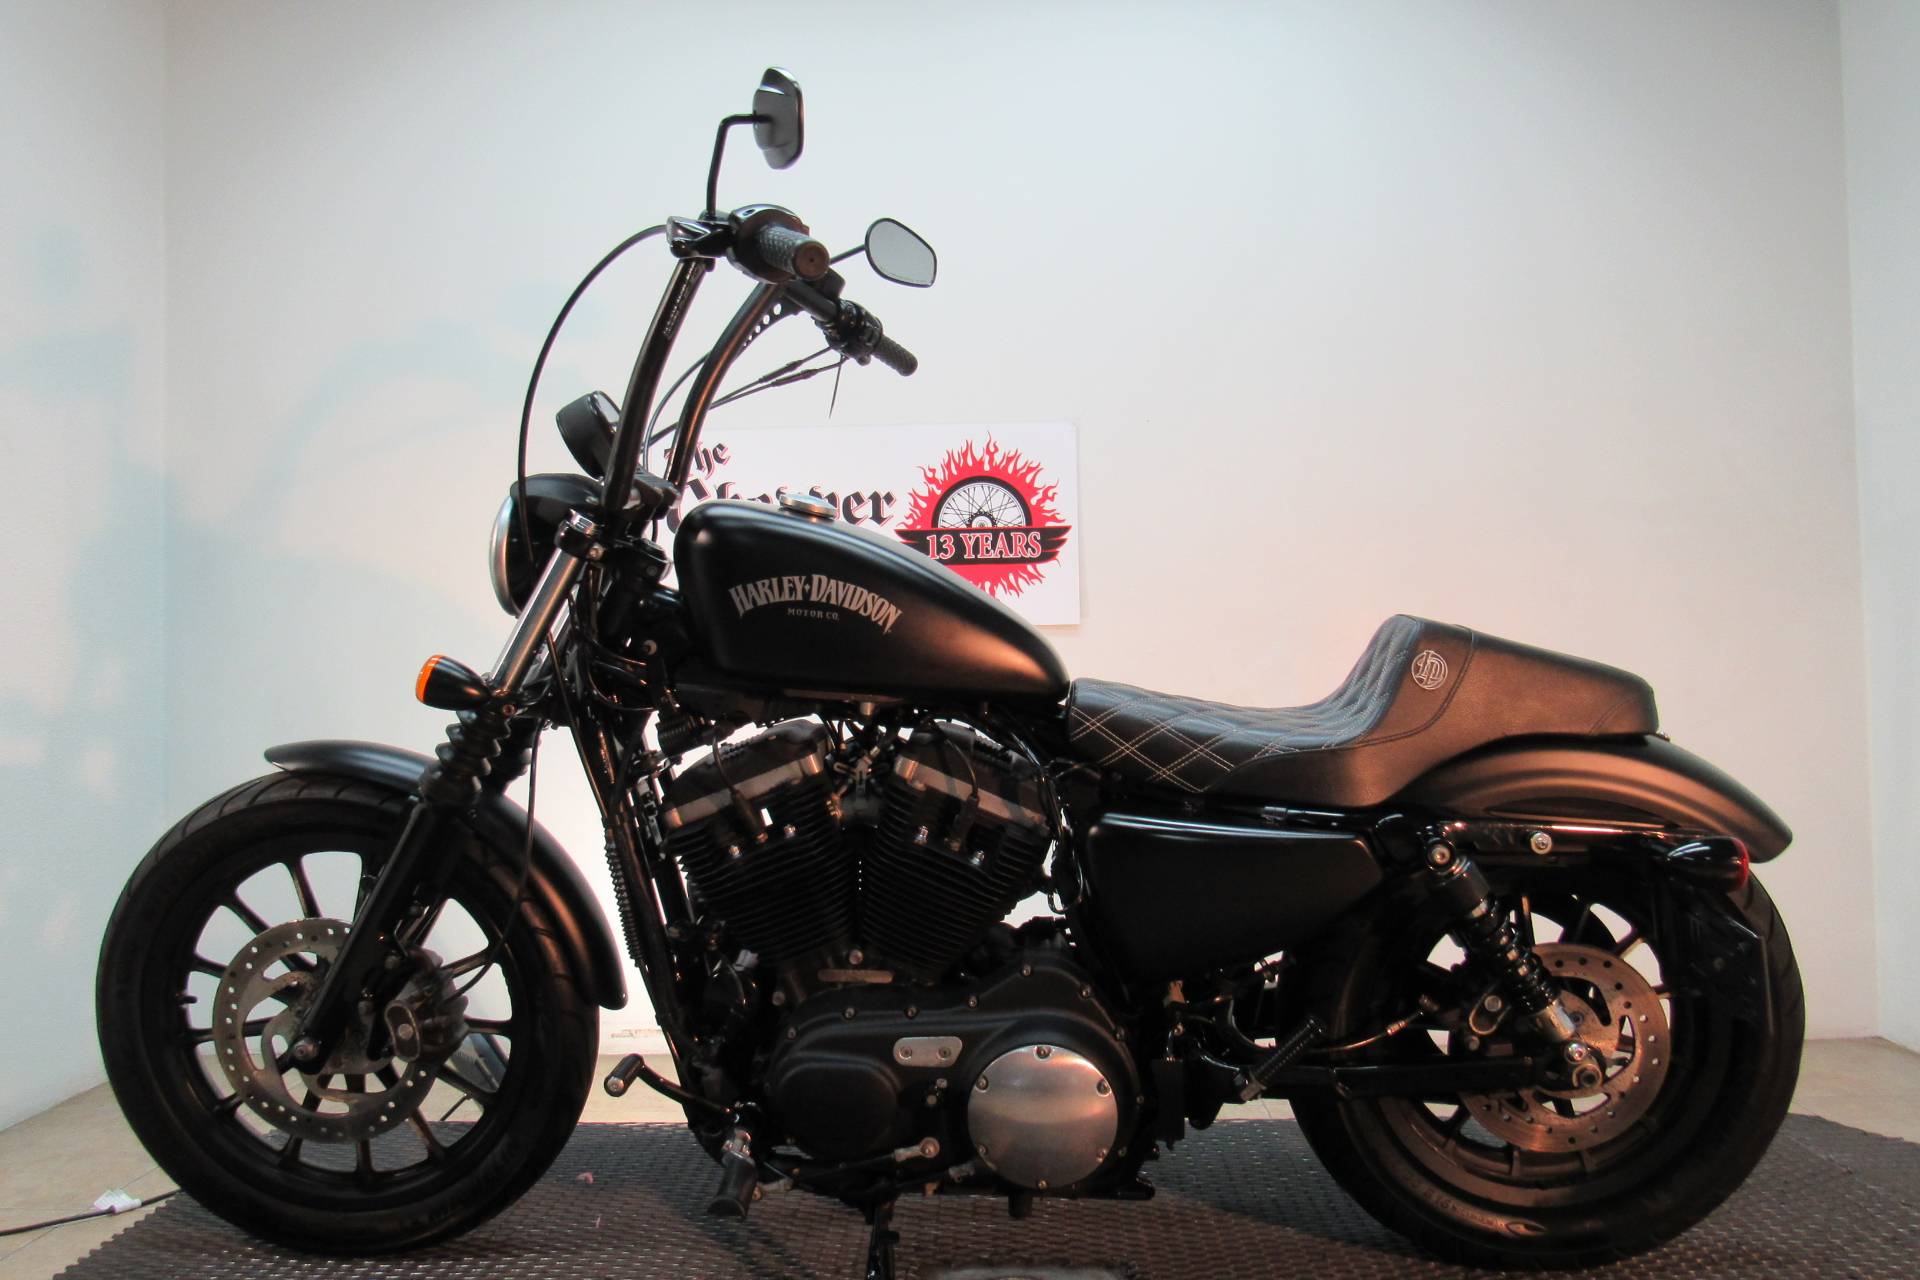 2015 Harley-Davidson Iron 883™ in Temecula, California - Photo 2